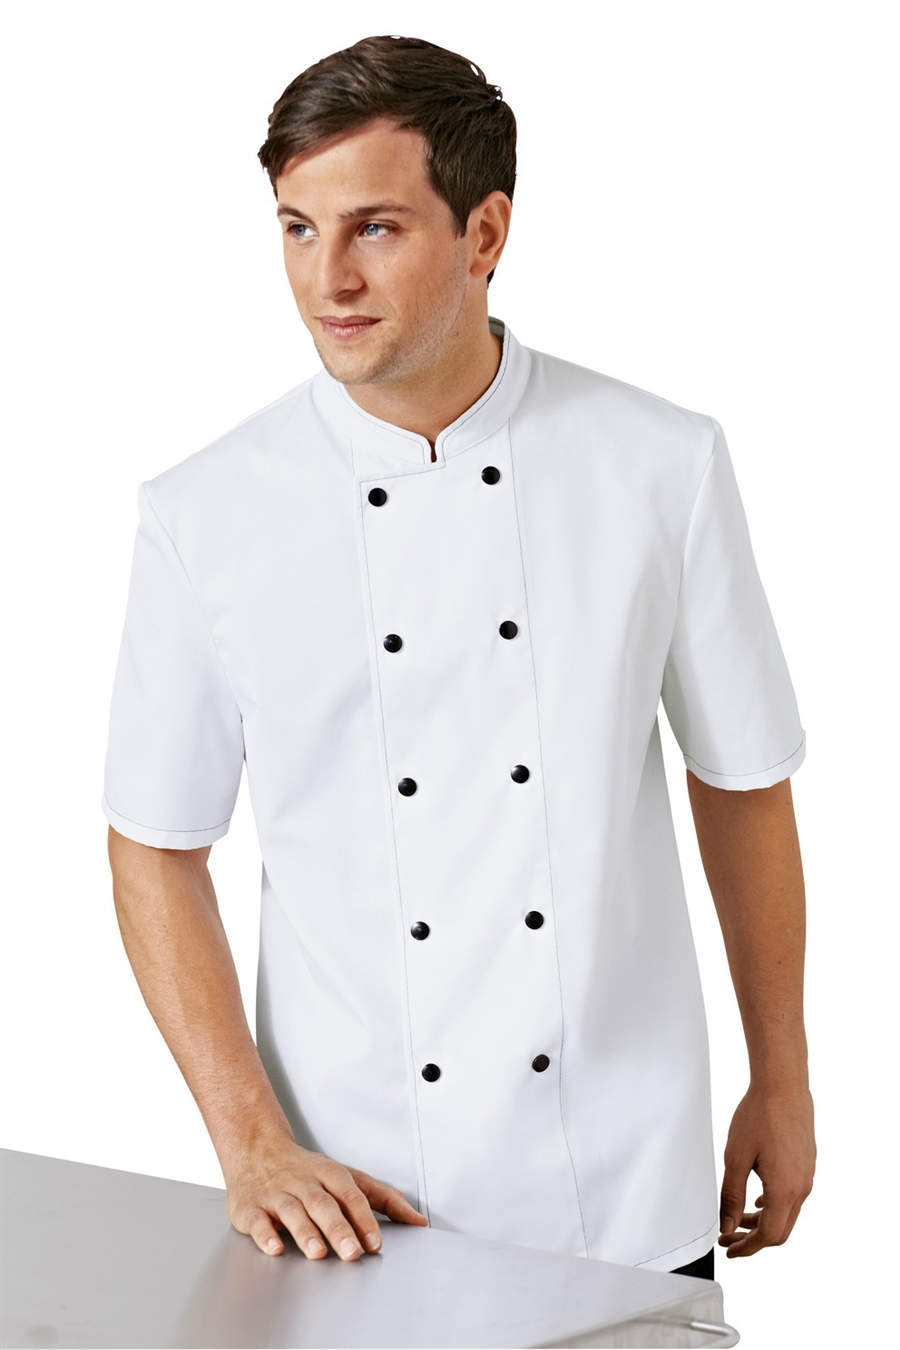 Atom Chef Jacket